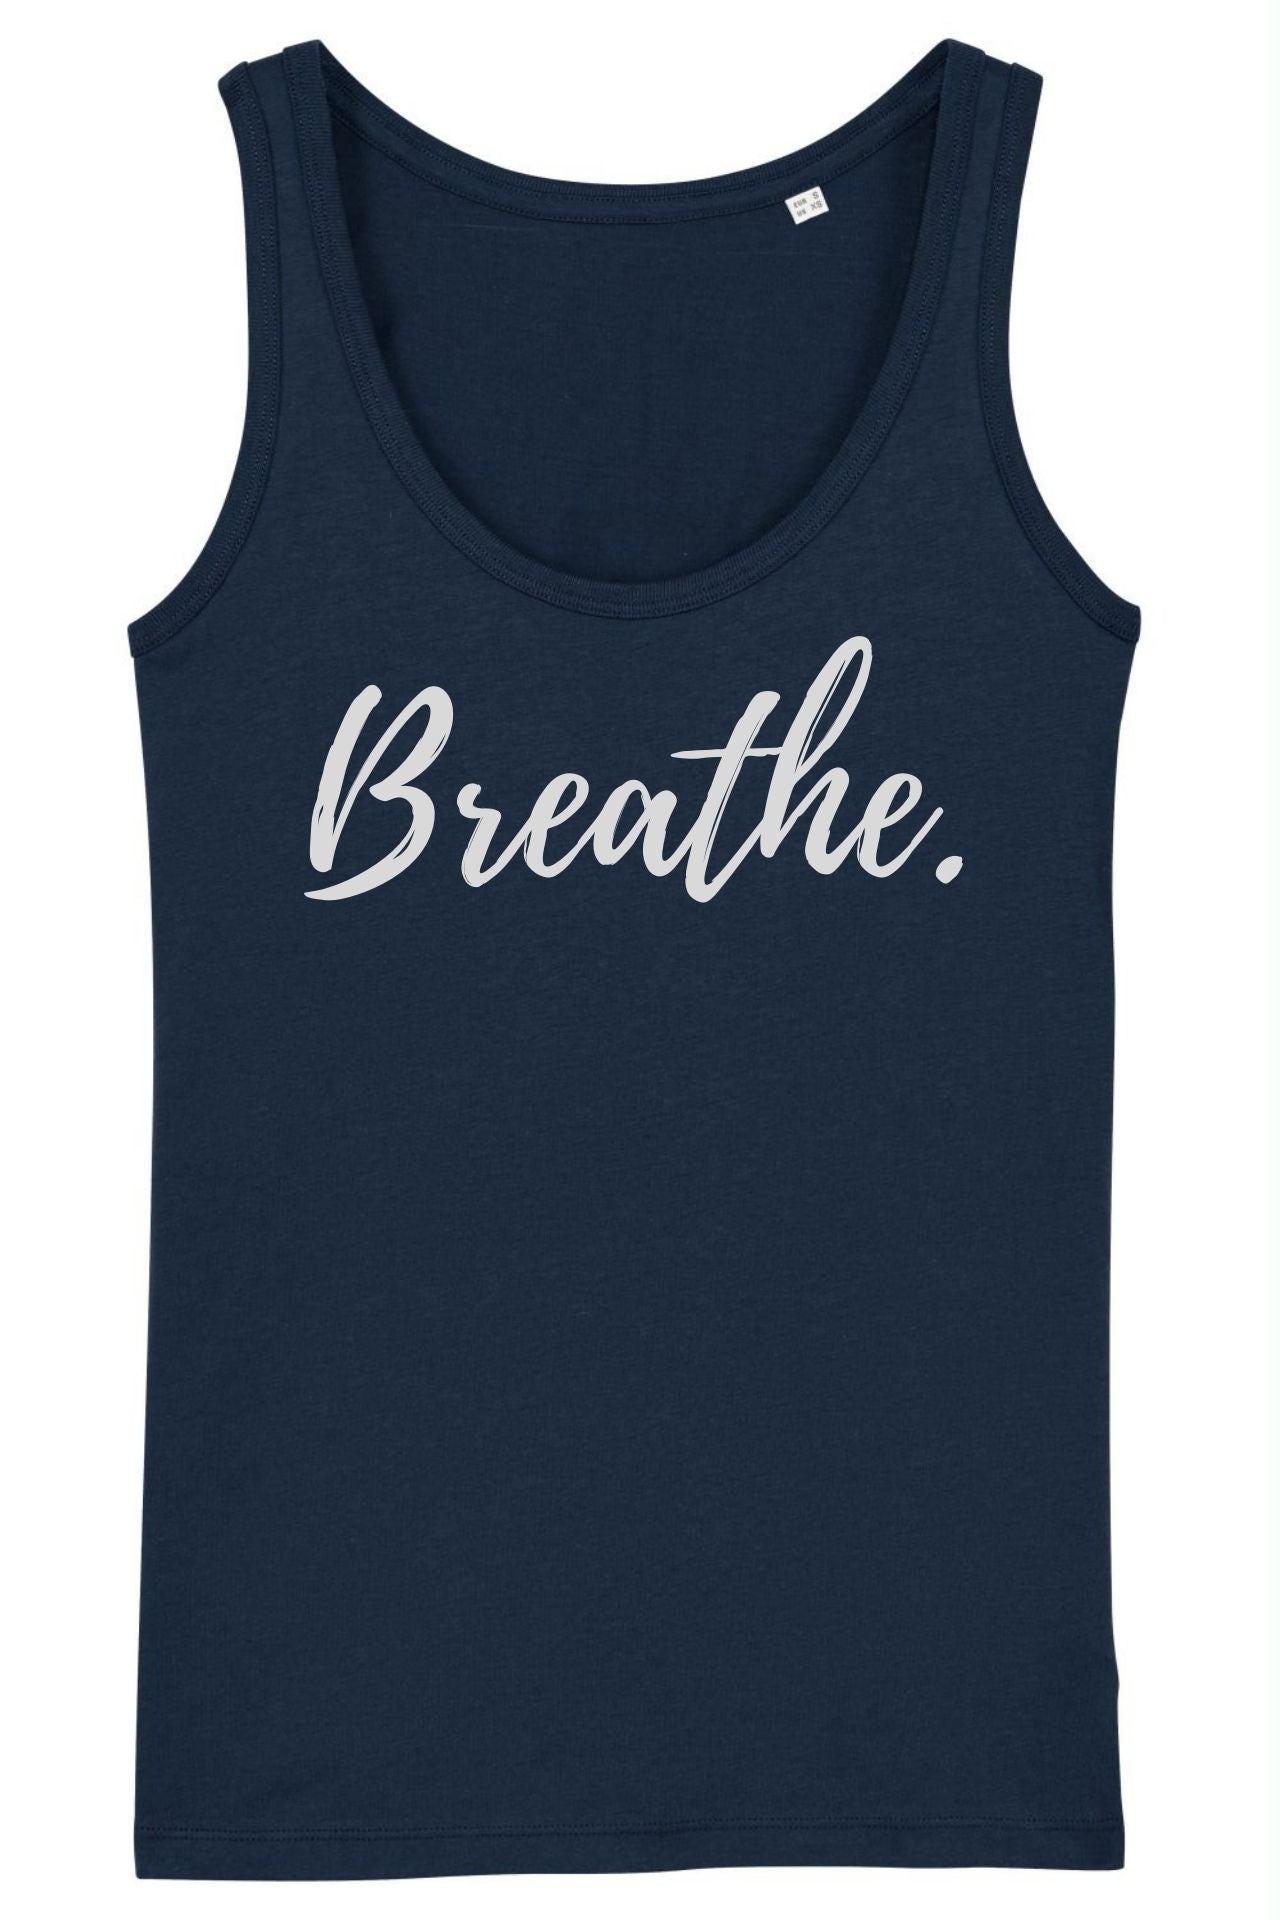 Navy Blue Breathe vest top - yoga and pilates vest